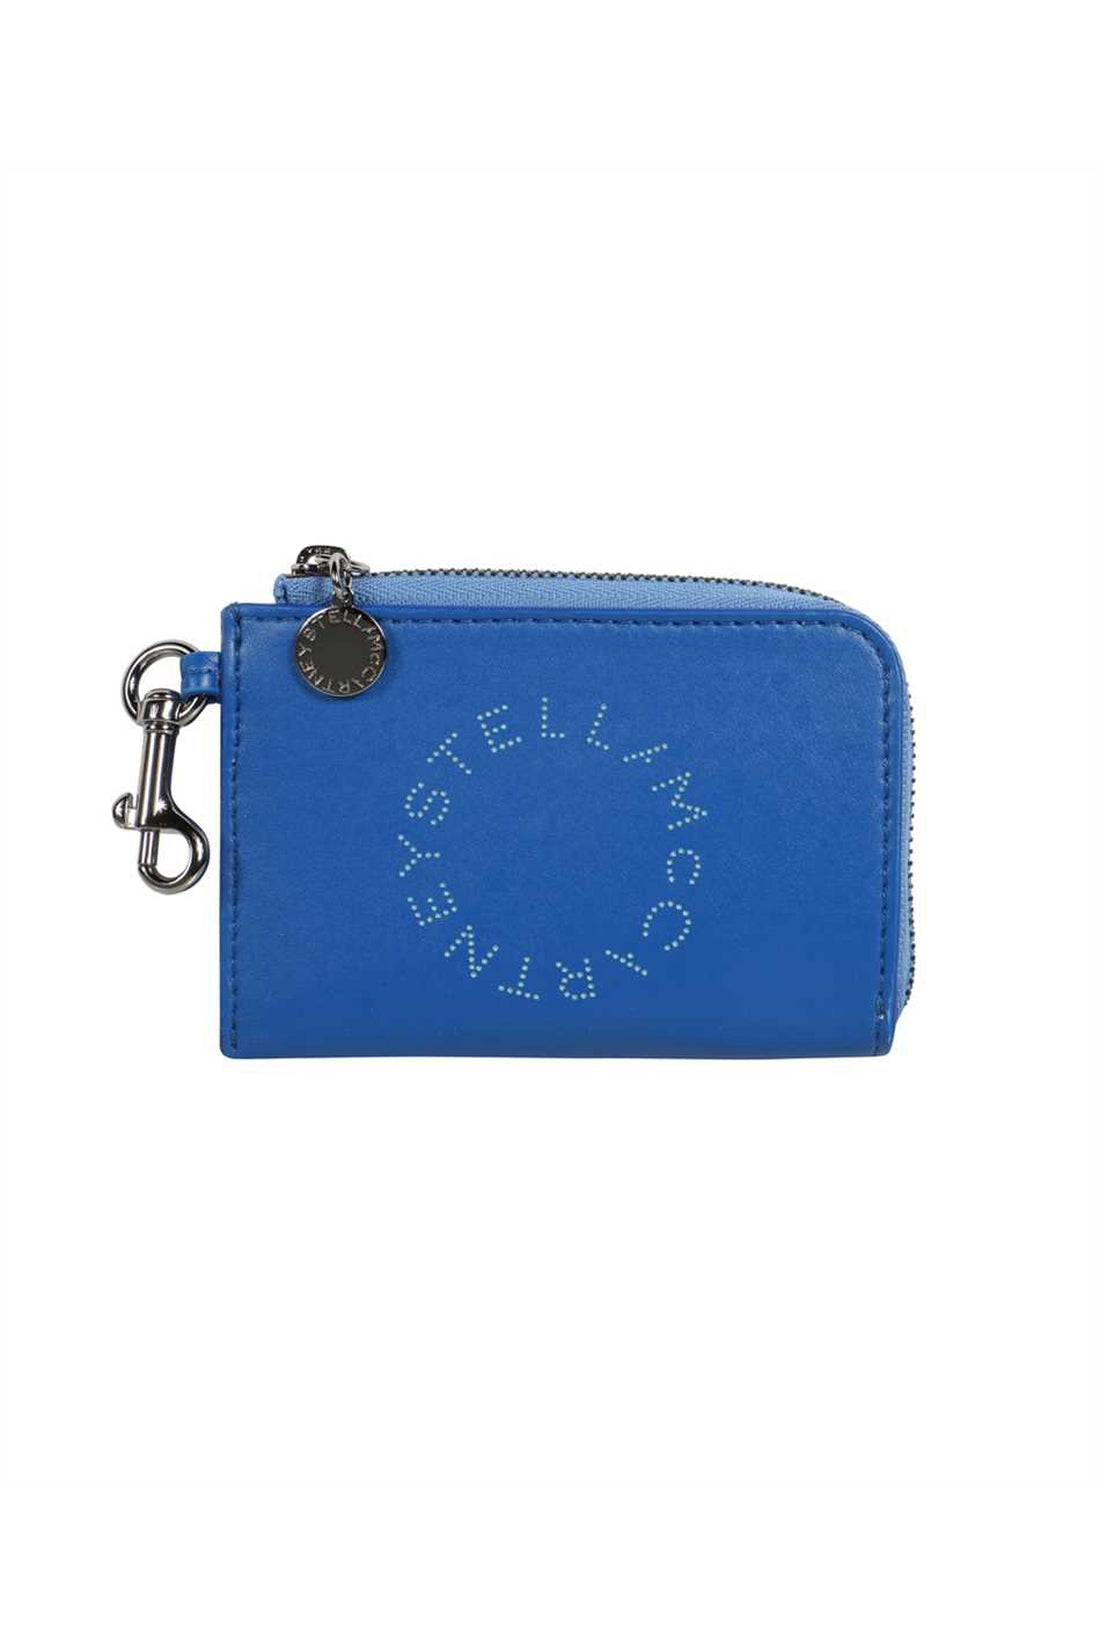 Stella McCartney-OUTLET-SALE-Stella Logo Alter-Nappa card holder-ARCHIVIST